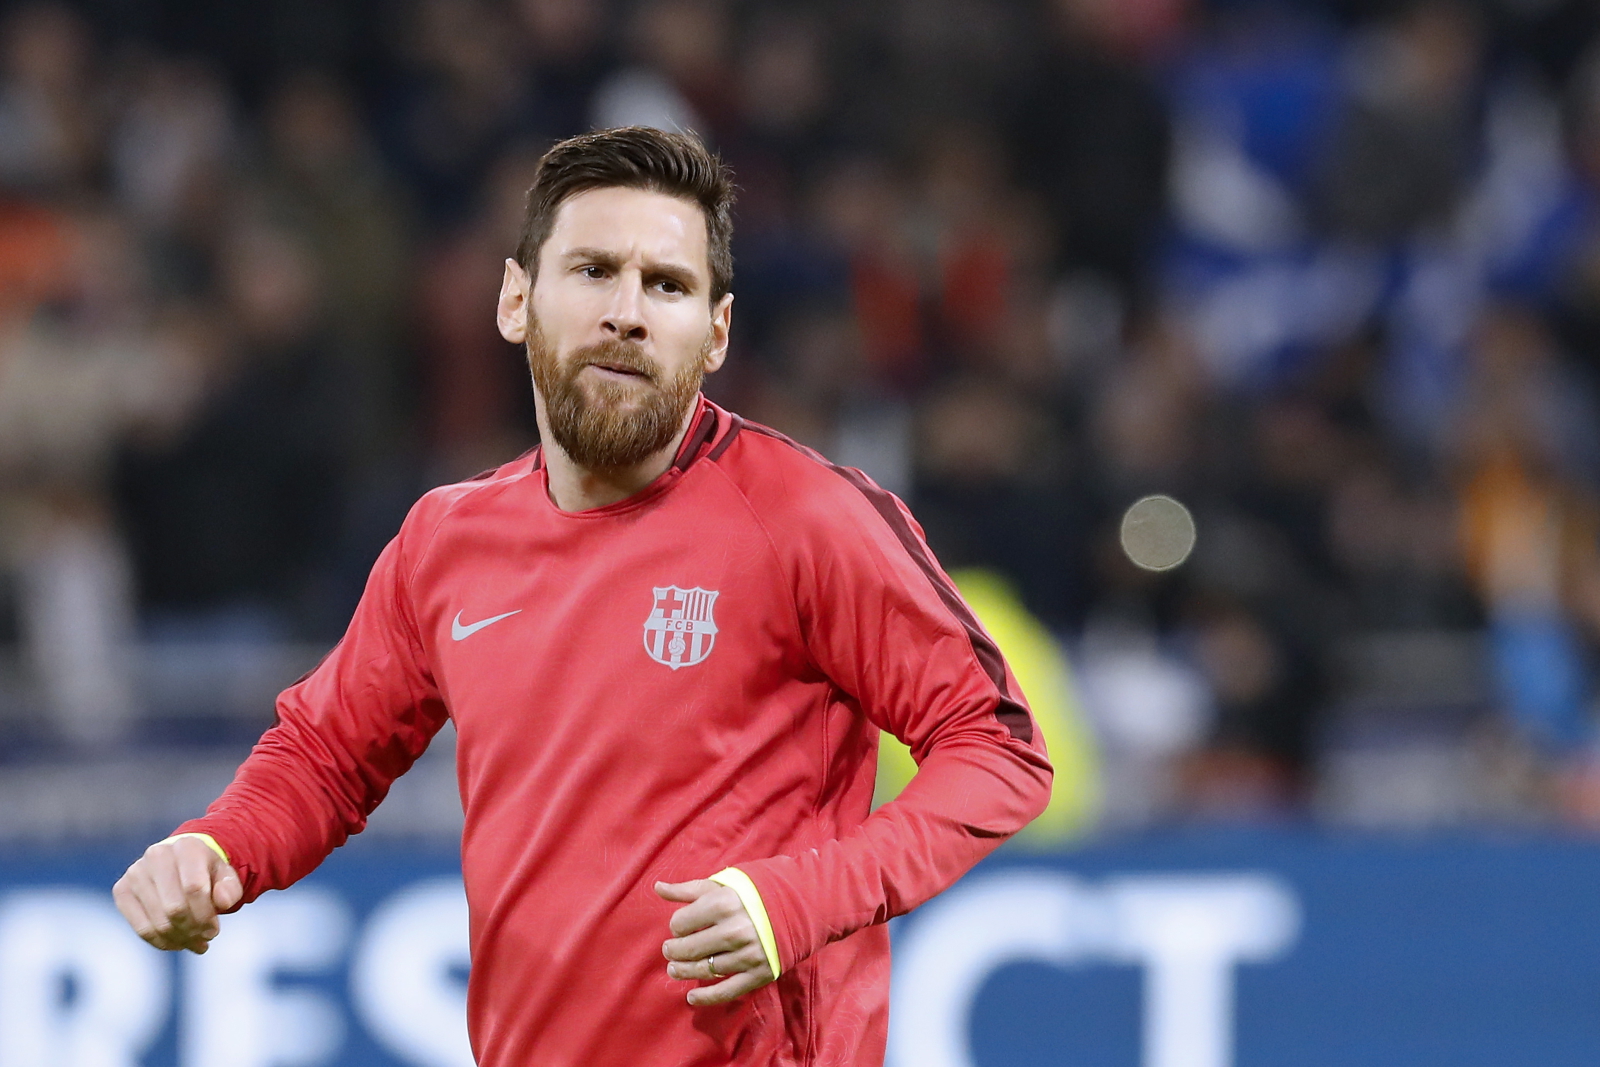 Lionel Messi podczas meczu Ligi Mistrzów, Lyon, Francja. Fot. PAP/EPA/SEBASTIEN NOGIER